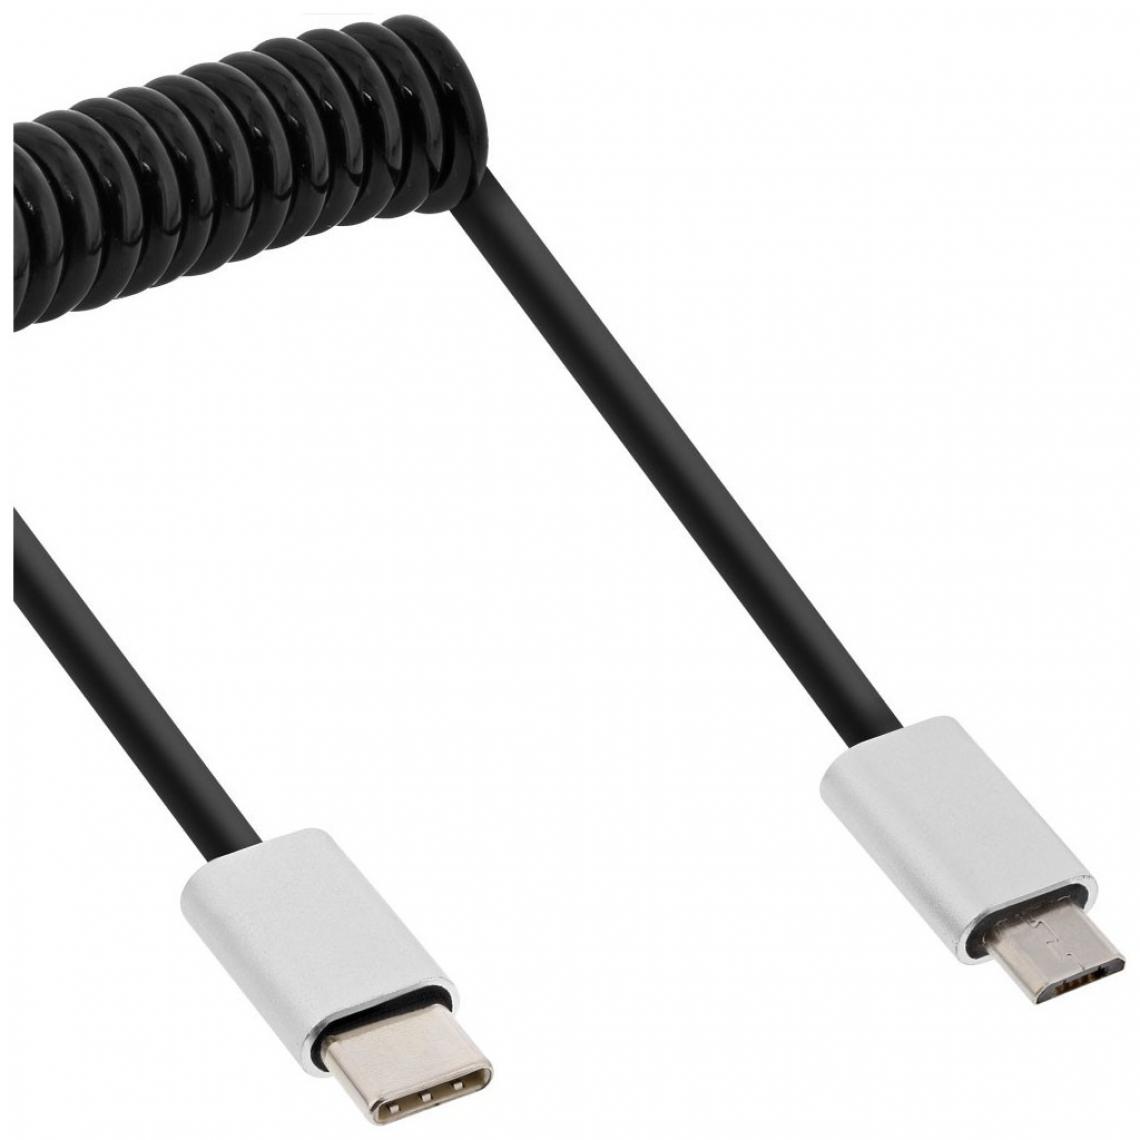 Nedis - Câble spiralé InLine® USB 2.0, fiche type C à fiche Micro-B, noir / alu, flexible, 2 m - Câble antenne